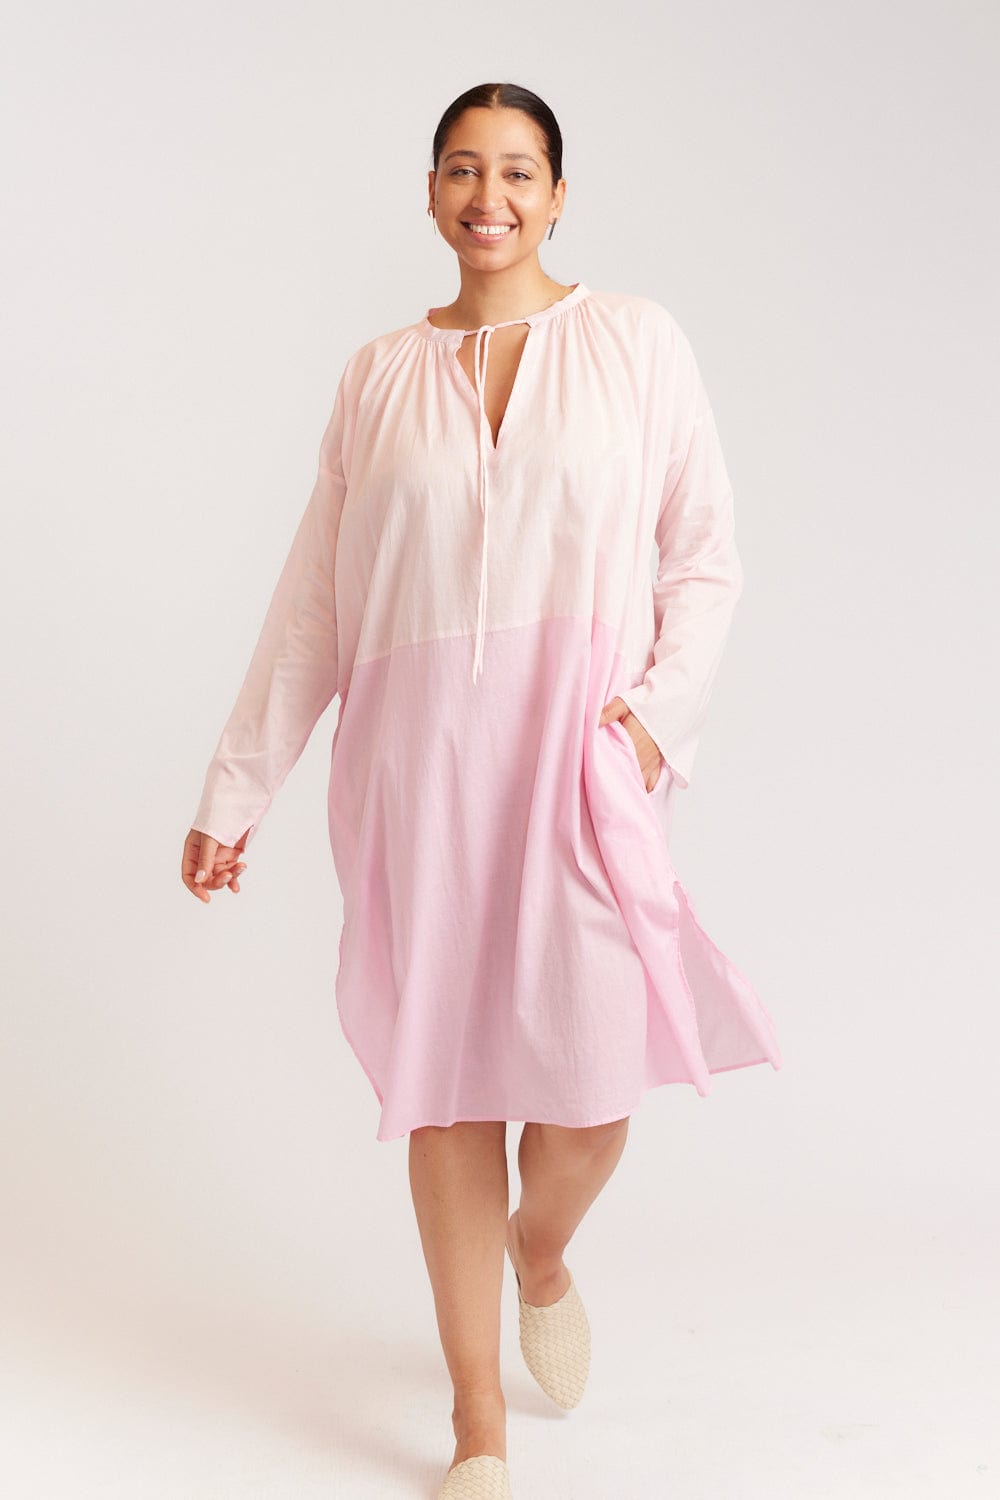 Alessandra Haze Dress in Lotus Pink Cotton Voile